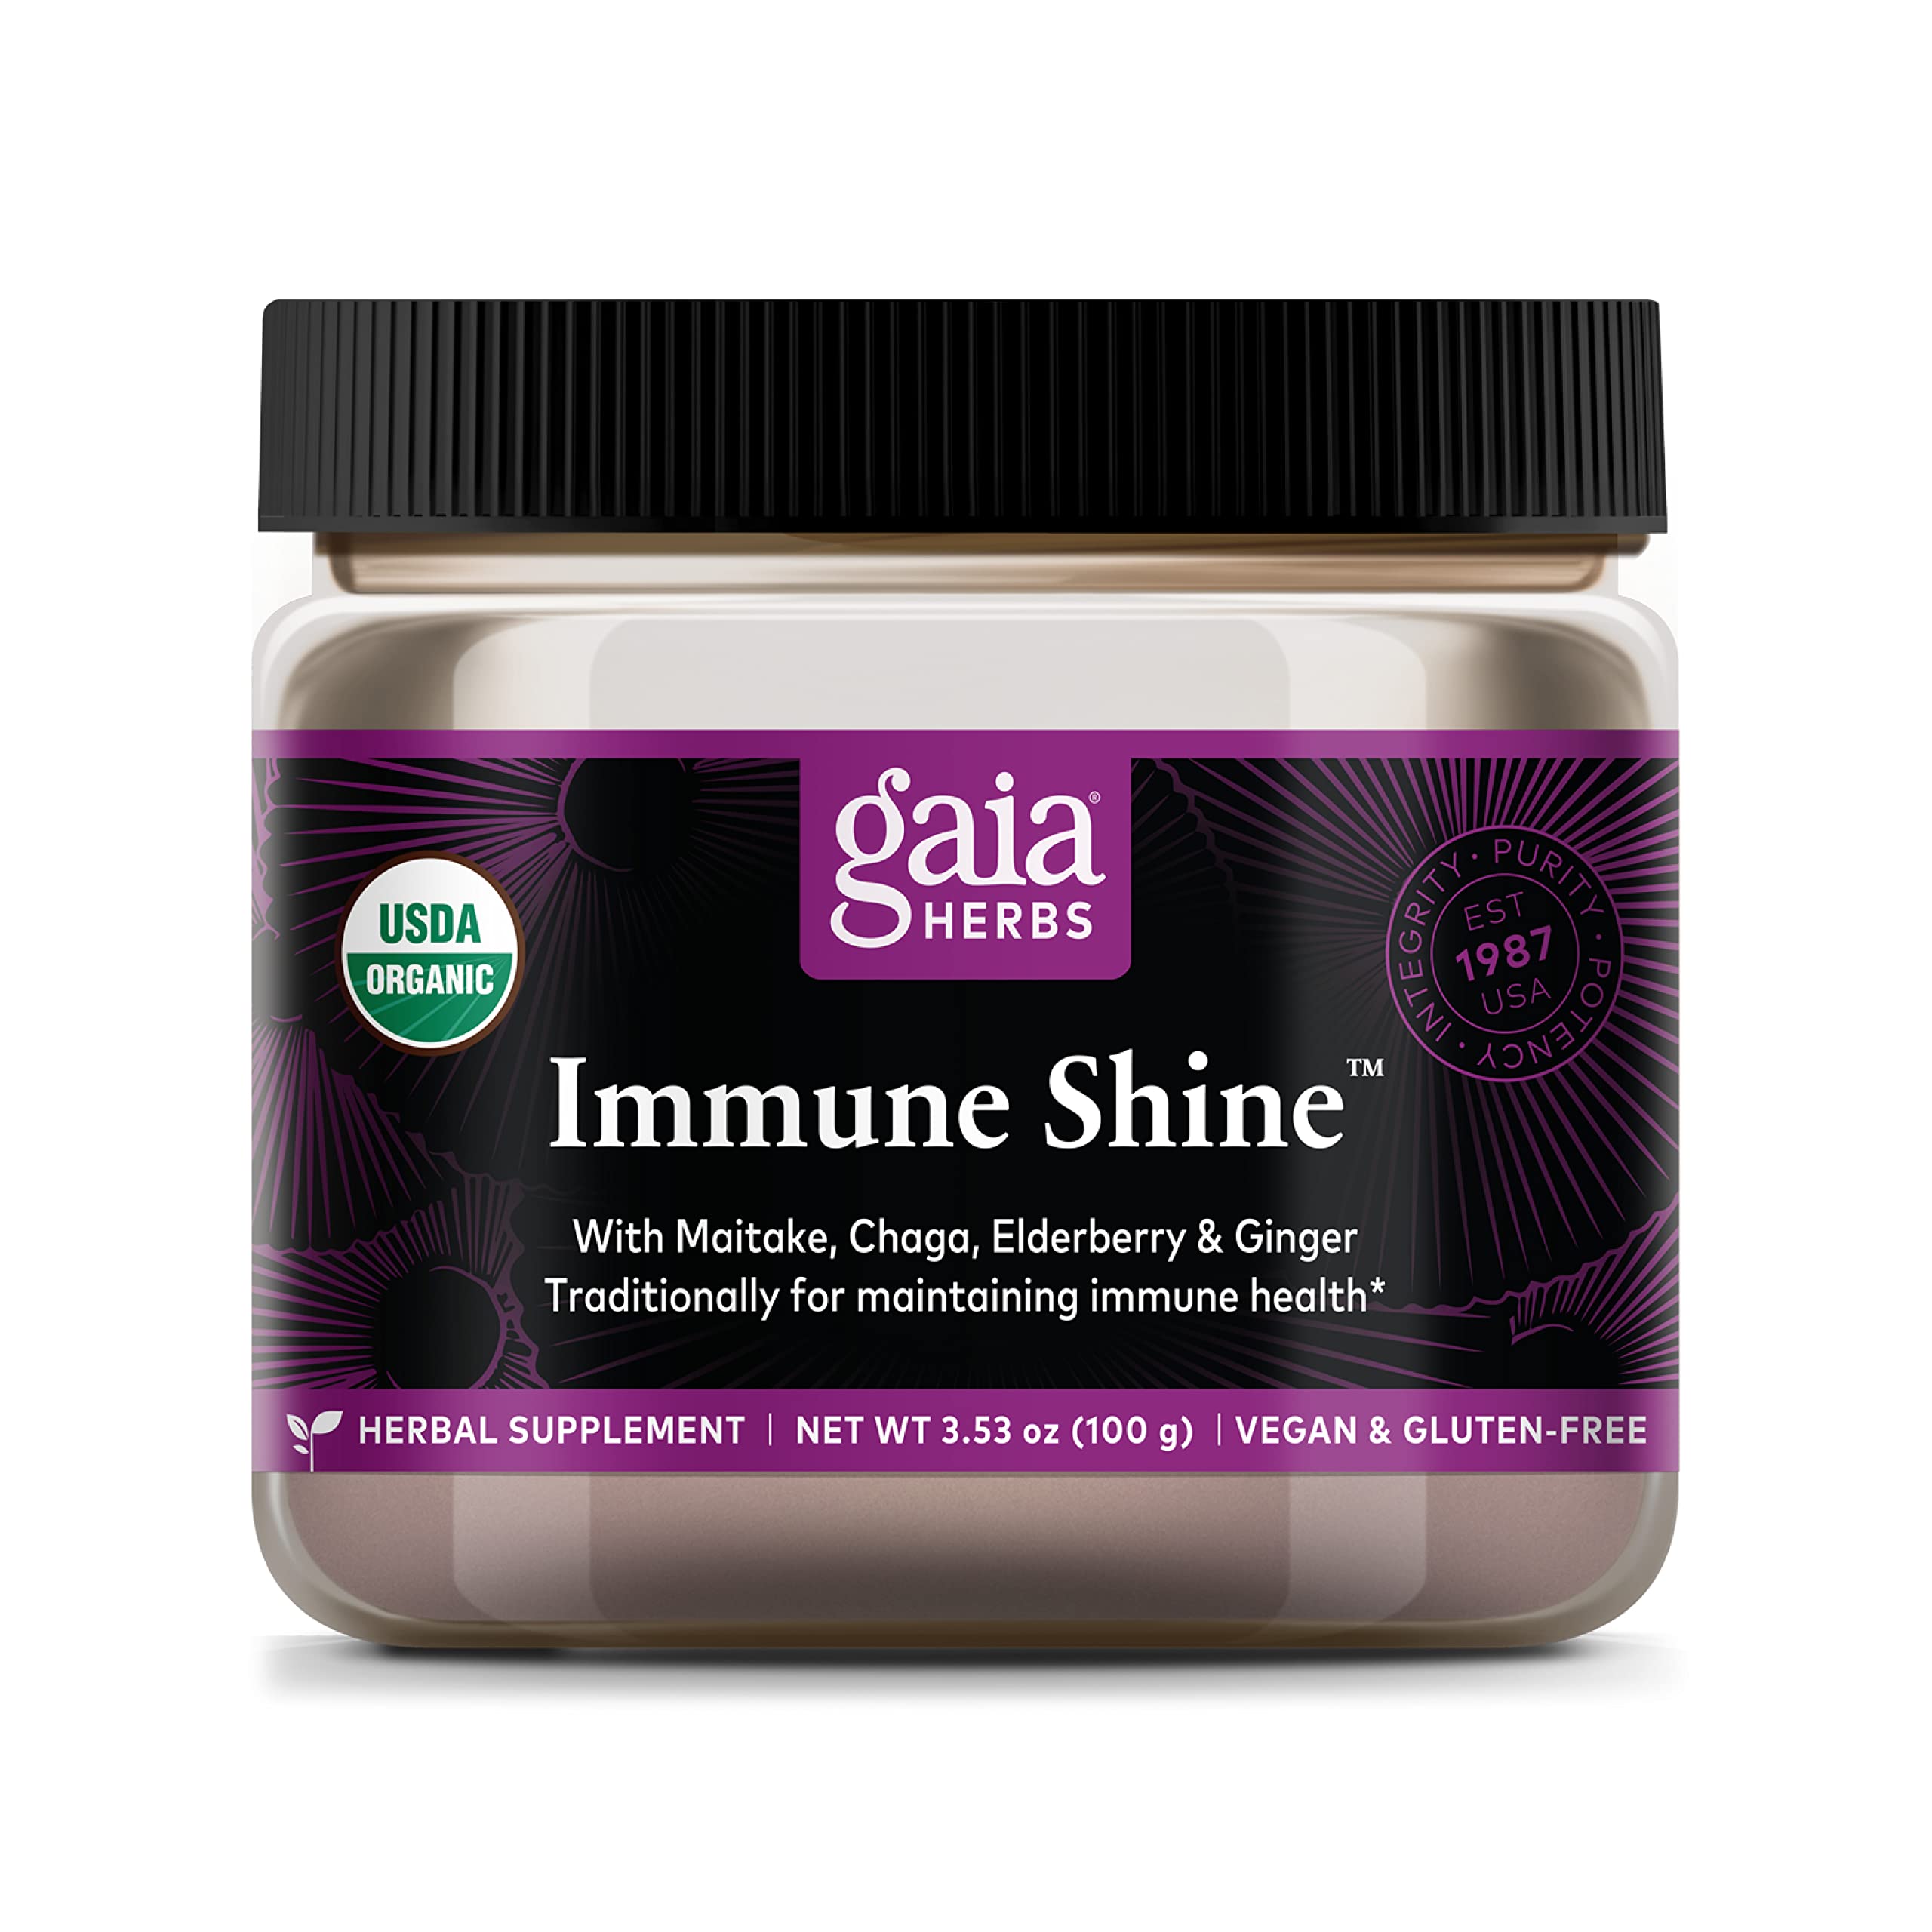 Gaia Herbs Immune Shine Mushroom and Herb Powder, Immune Support, Chaga Mushroom, Maitake Mushroom, Elderberry, Ginger, Daily Herbal Supplement, 3.53 Ounce